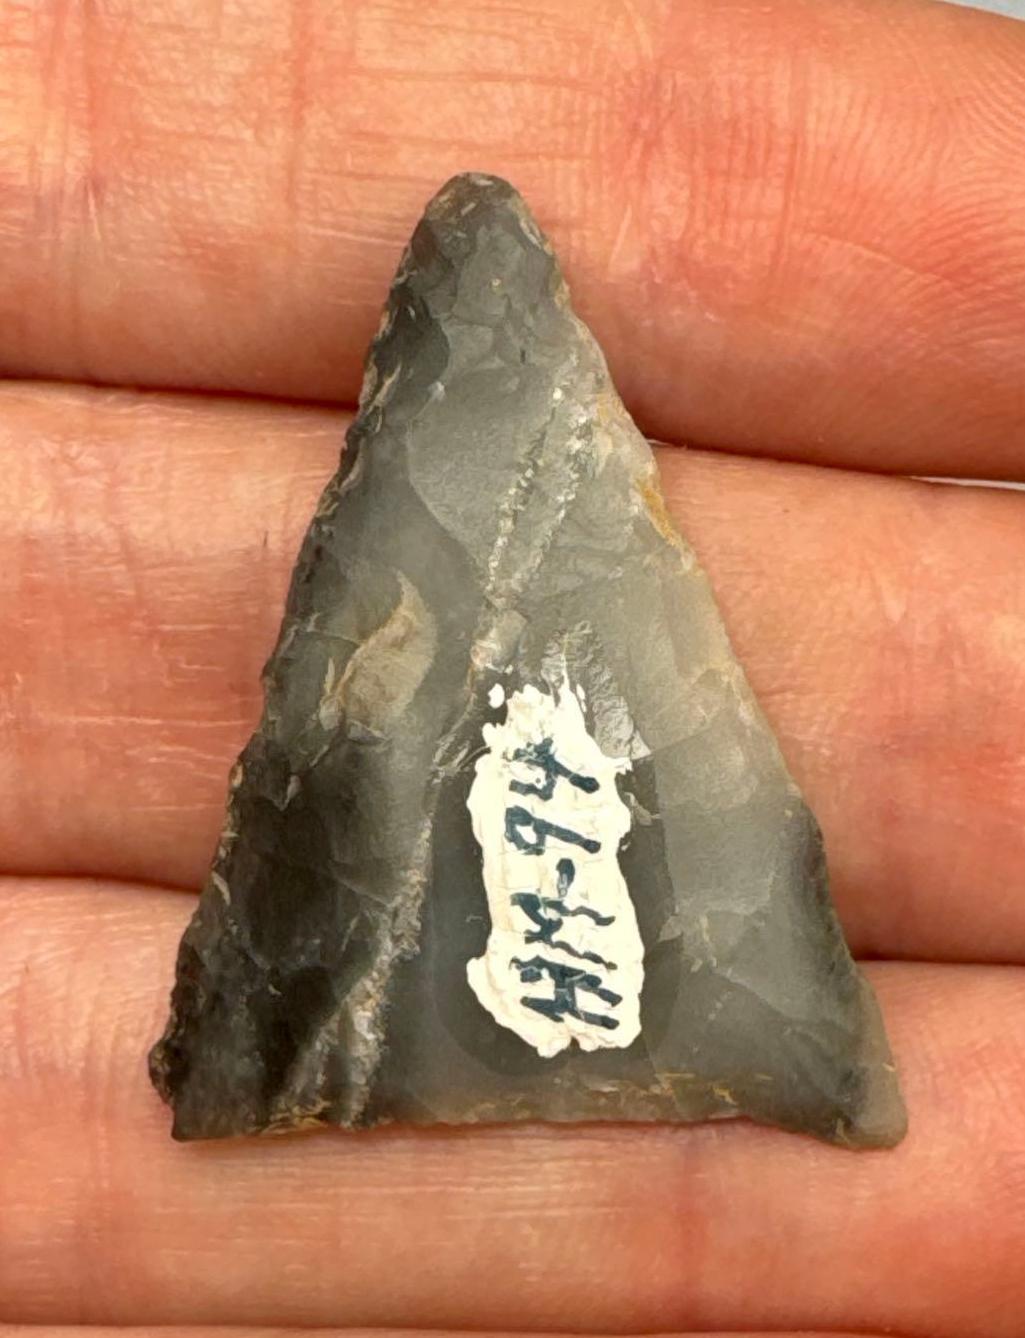 High Grade 1 1/4" 2-Tone Chalcedony Triangle, Found in PA/NJ/NY Tristate Area, Ex: Harry Mucklin, Le